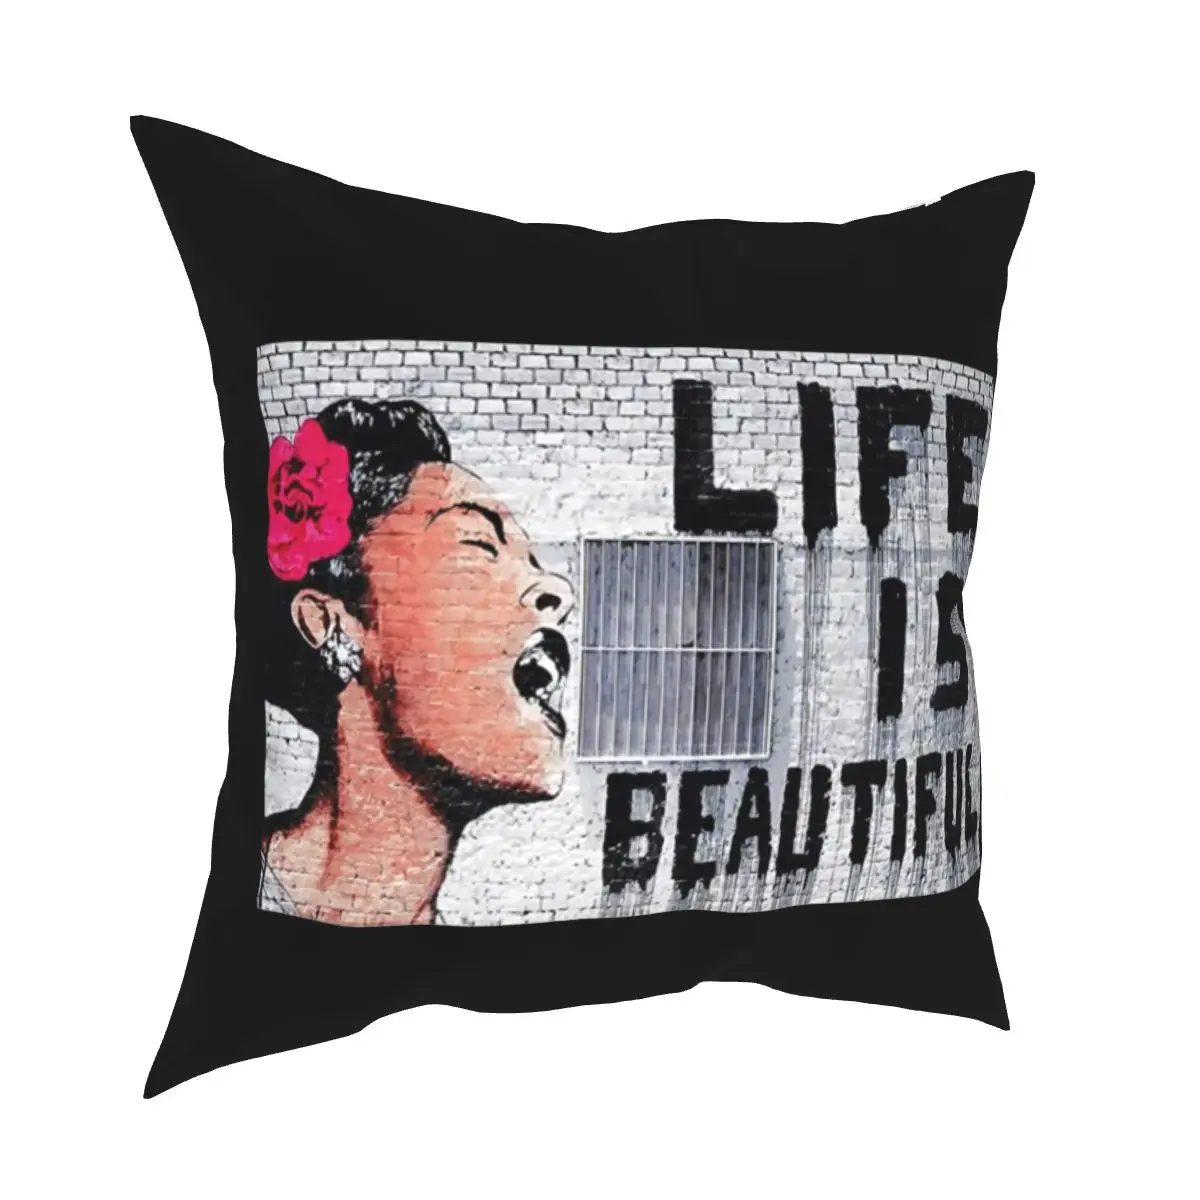 

Life Is Beautiful Pillowcase Cushion Cover Decor Banksy Street Art Graffiti Spray Paint Pop Art Pillow Case Cover Home 18'